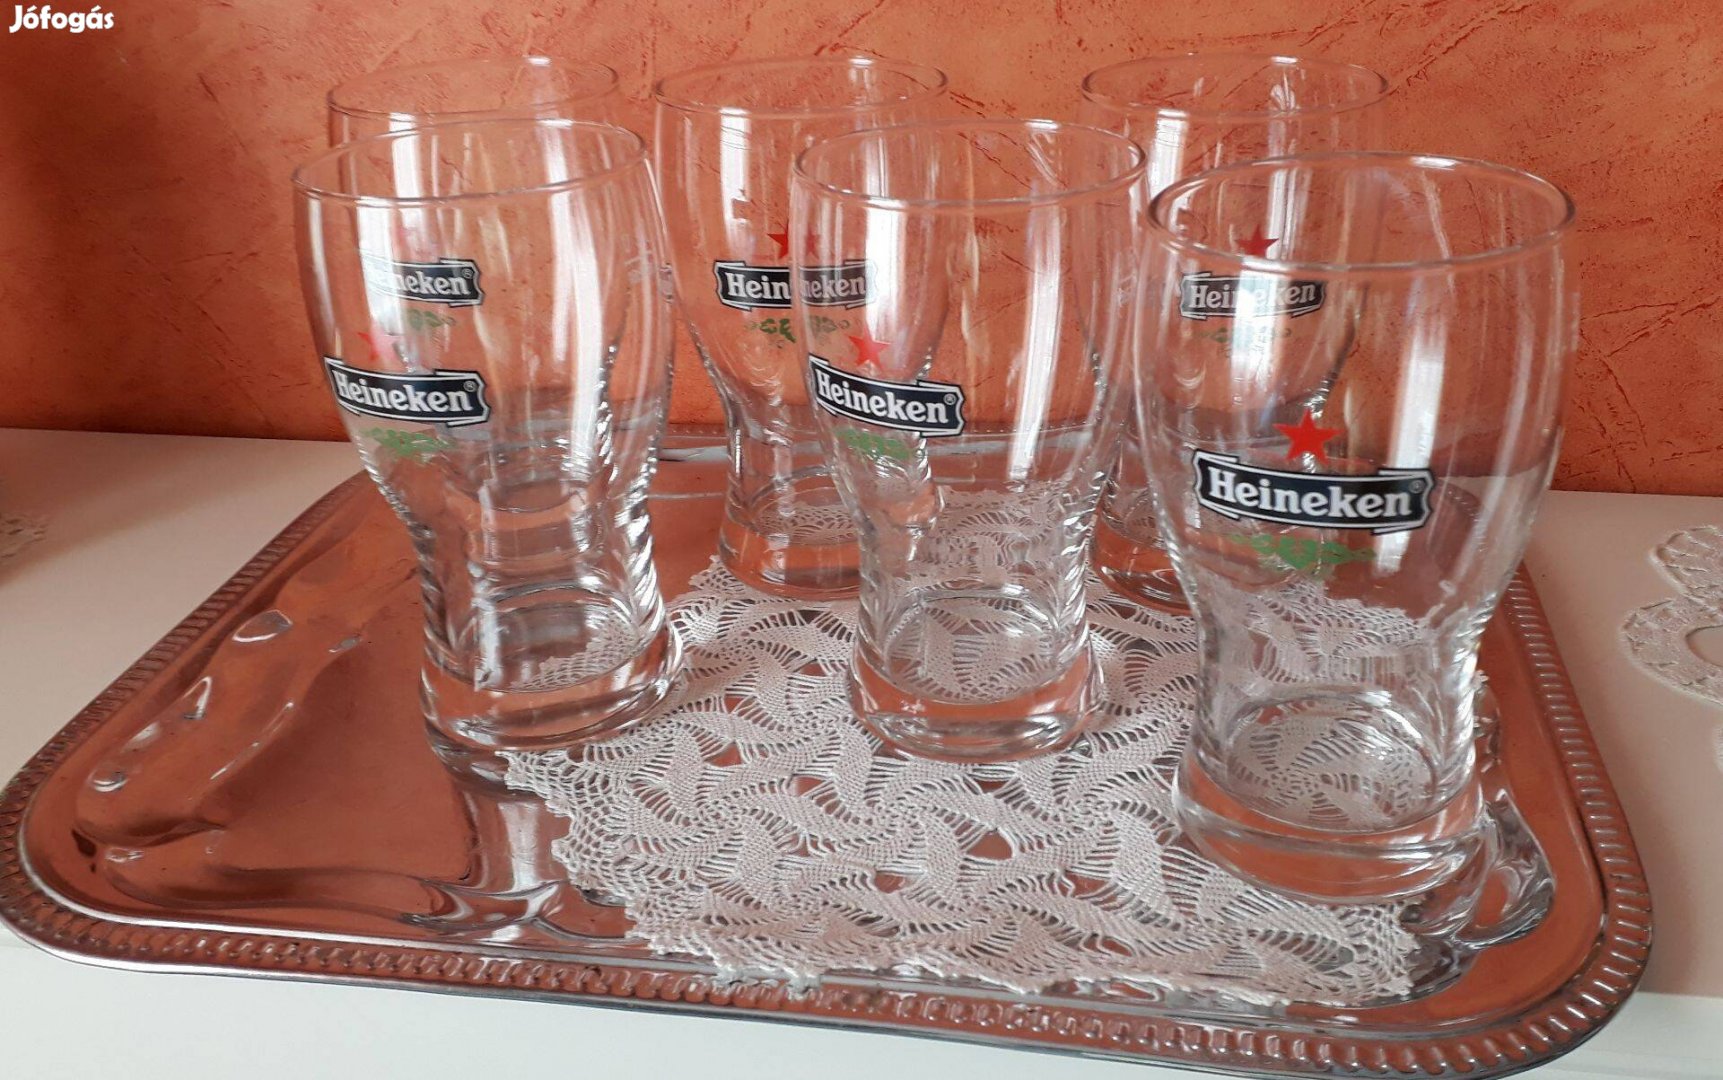 6 db Heinekenes üveg pohár ( 0,5 l)